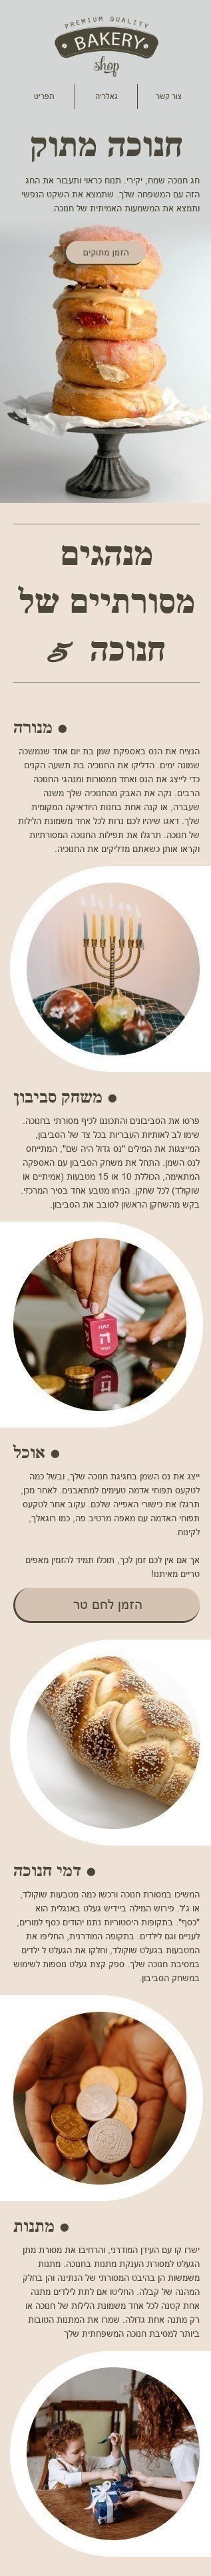 Hanukkah Email Template «Sweet Hanukkah» for Food industry mobile view